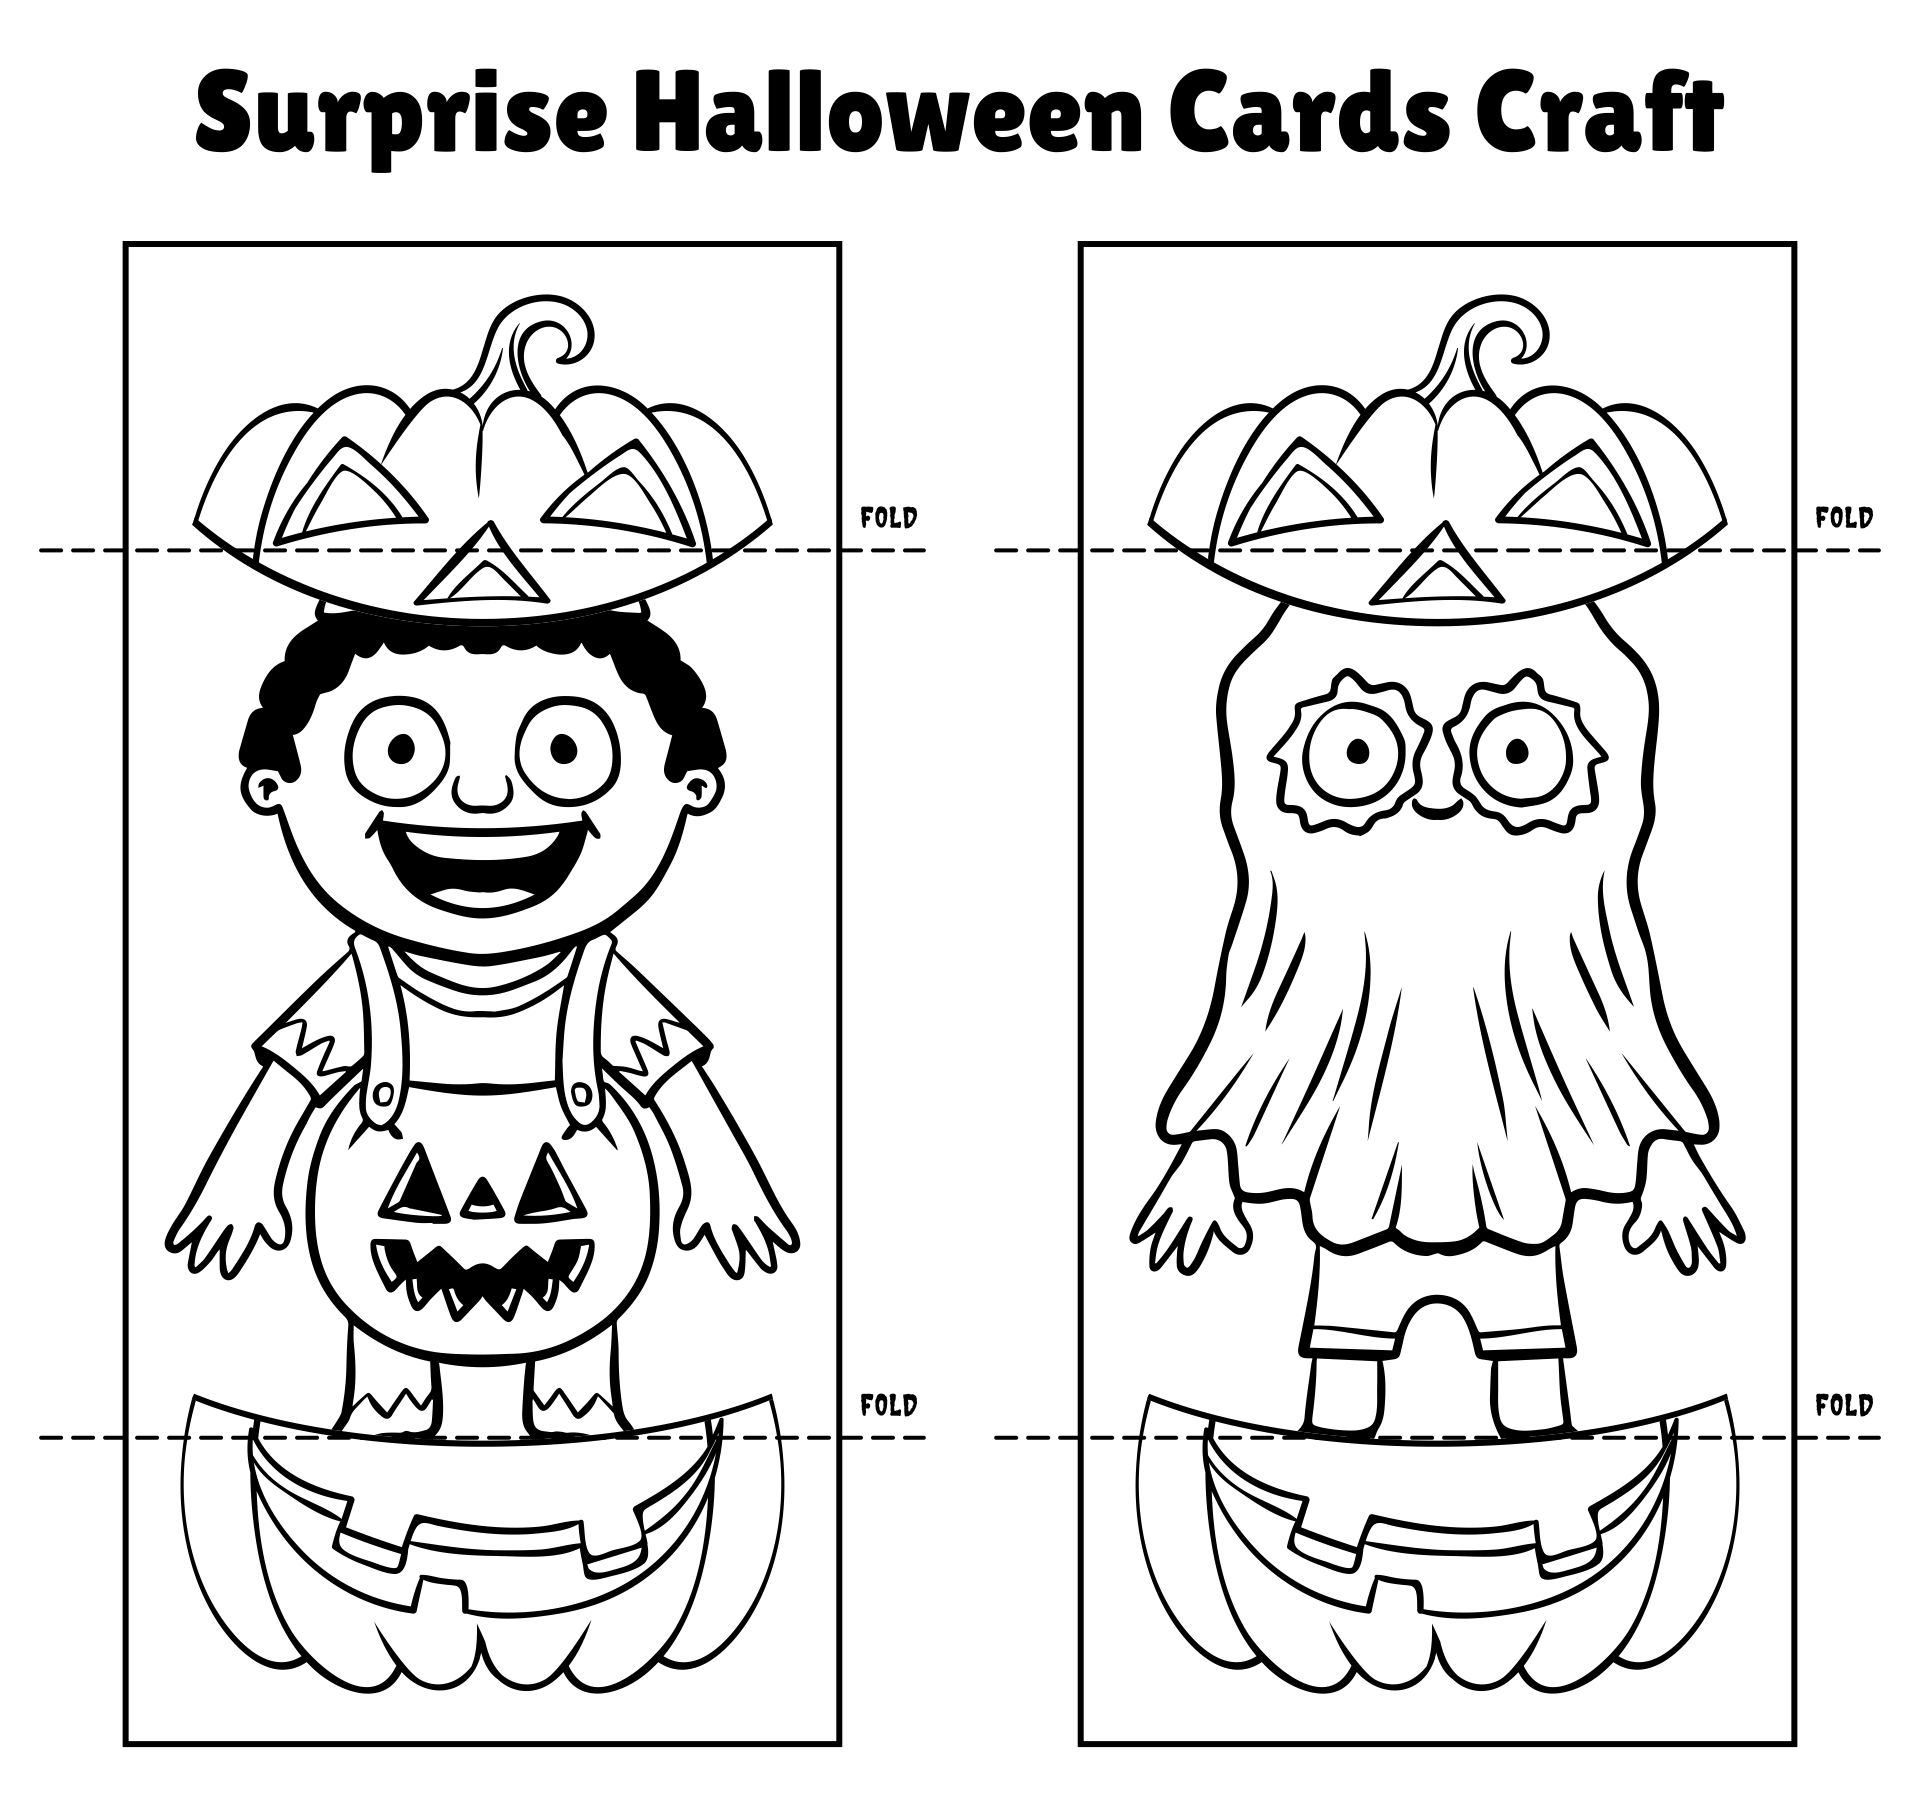 Printable Surprise Halloween Cards Craft